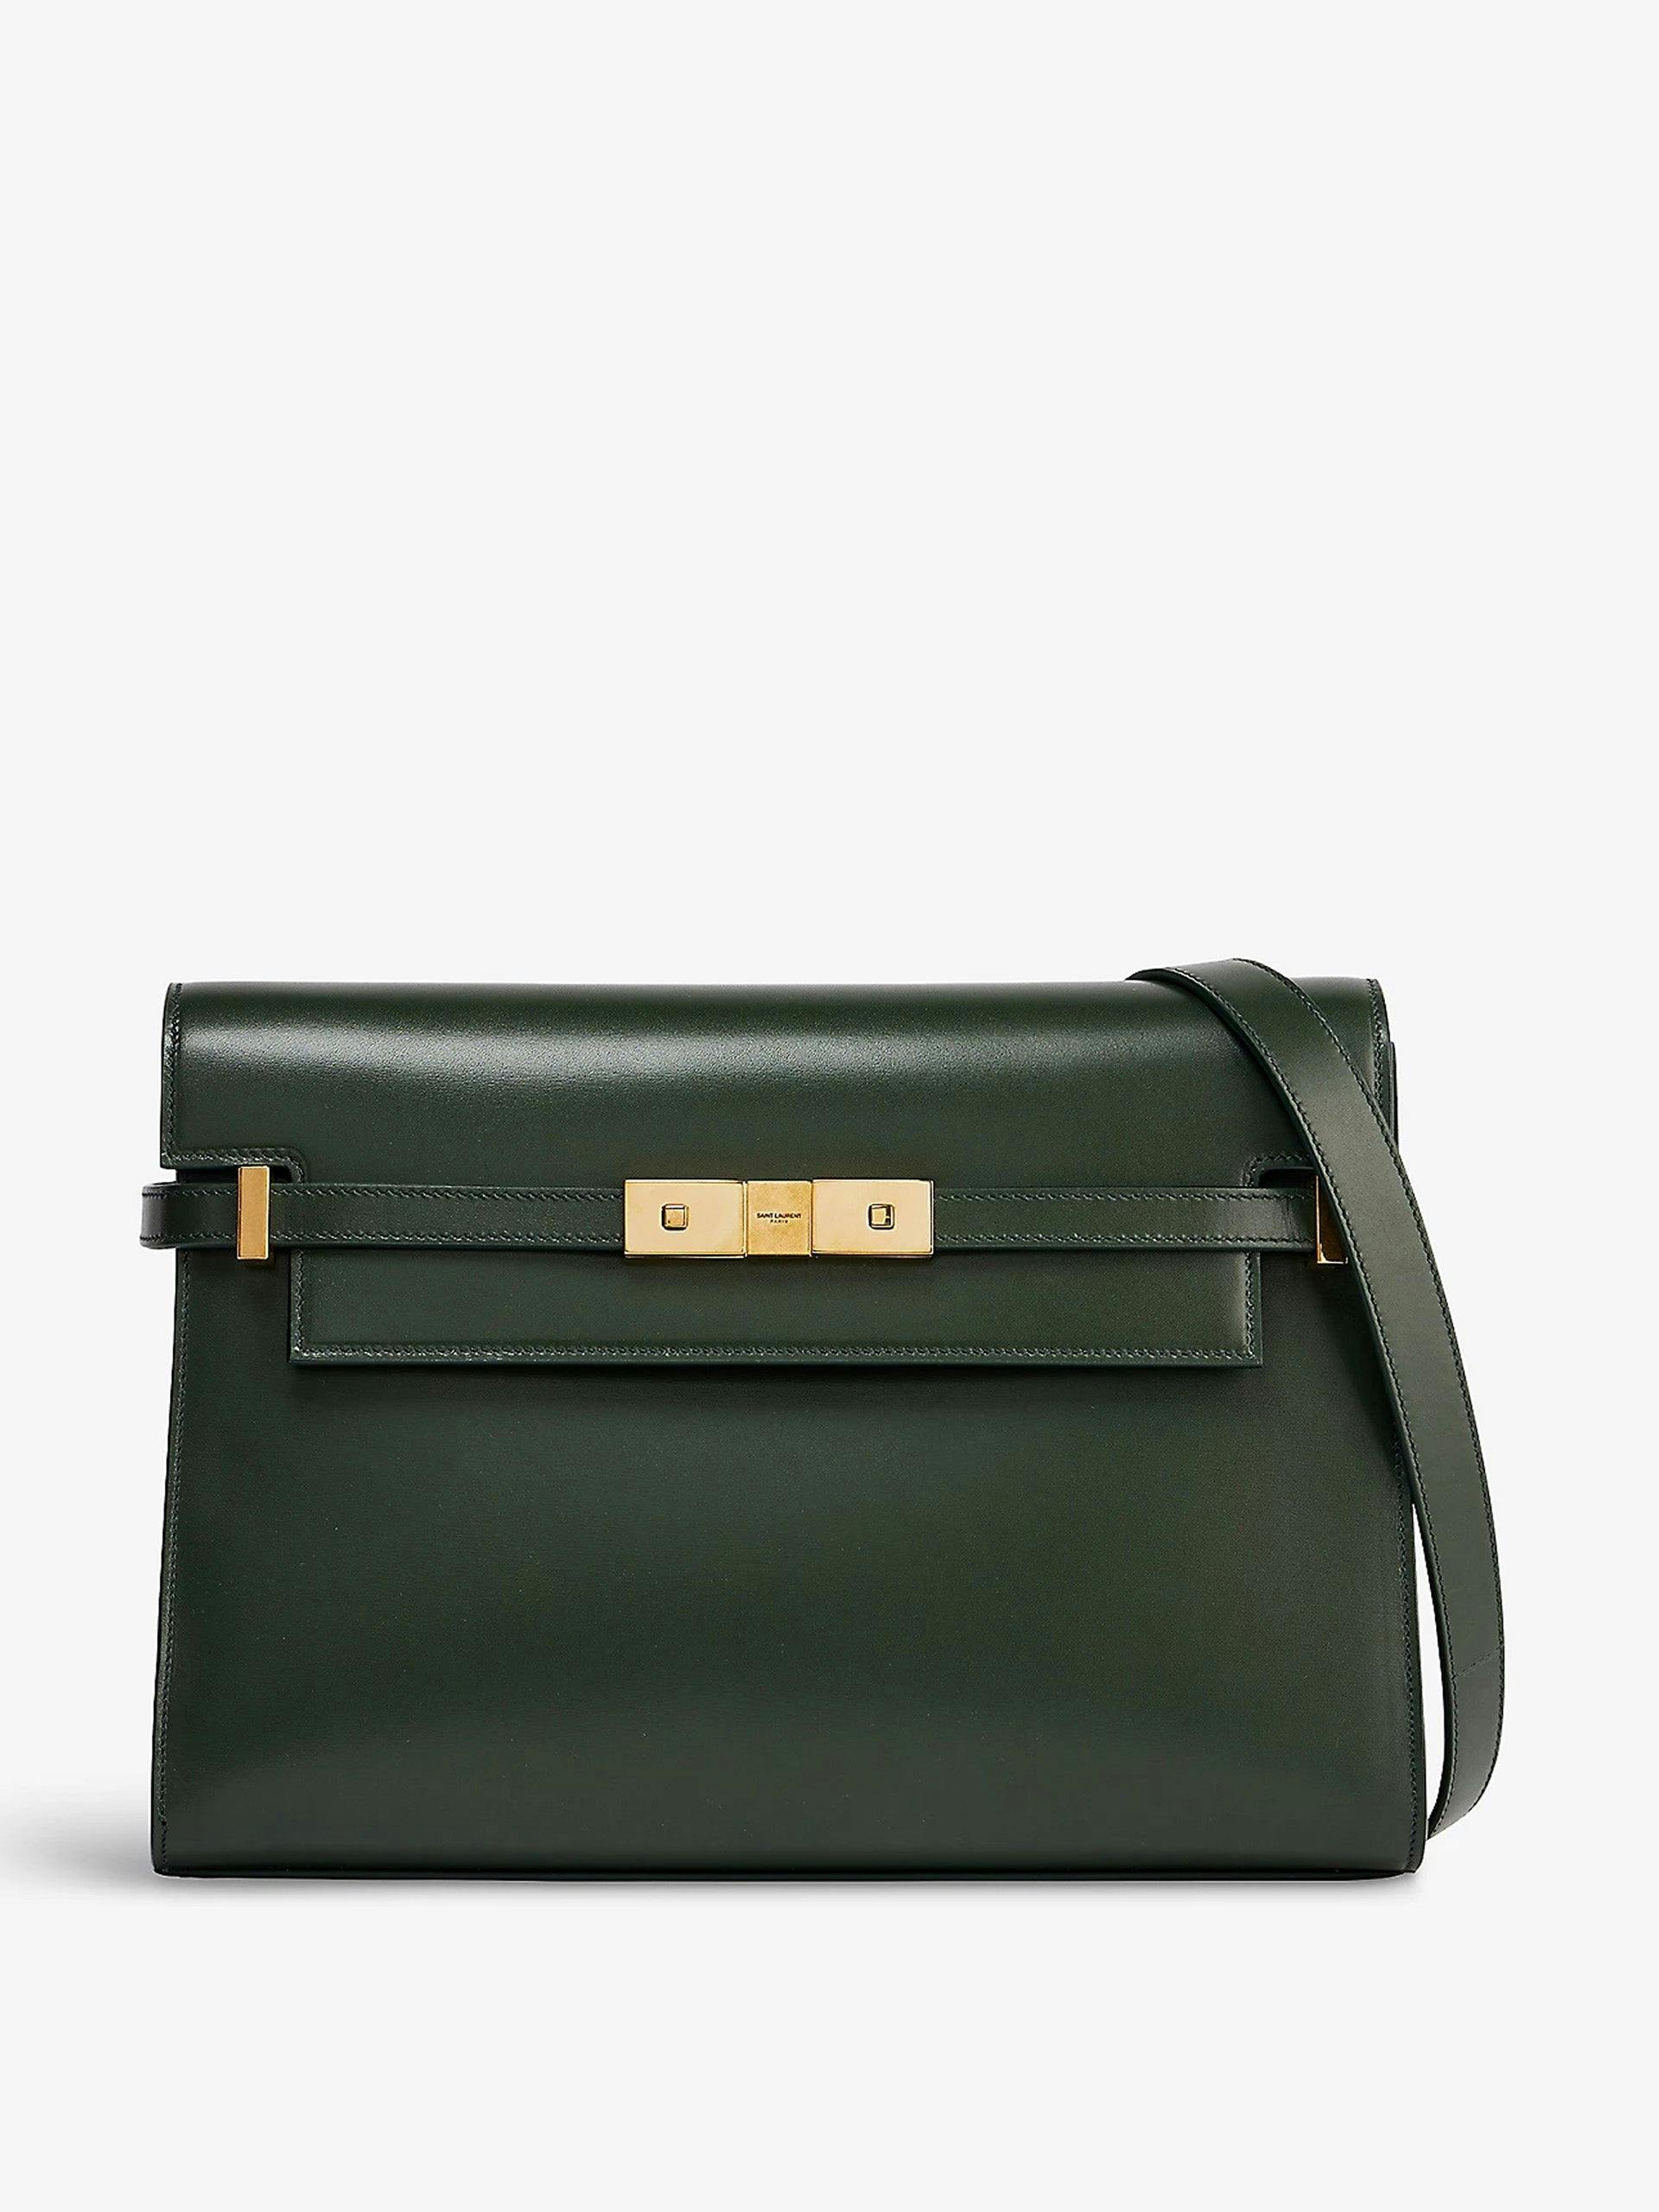 Green leather medium Manhattan handbag